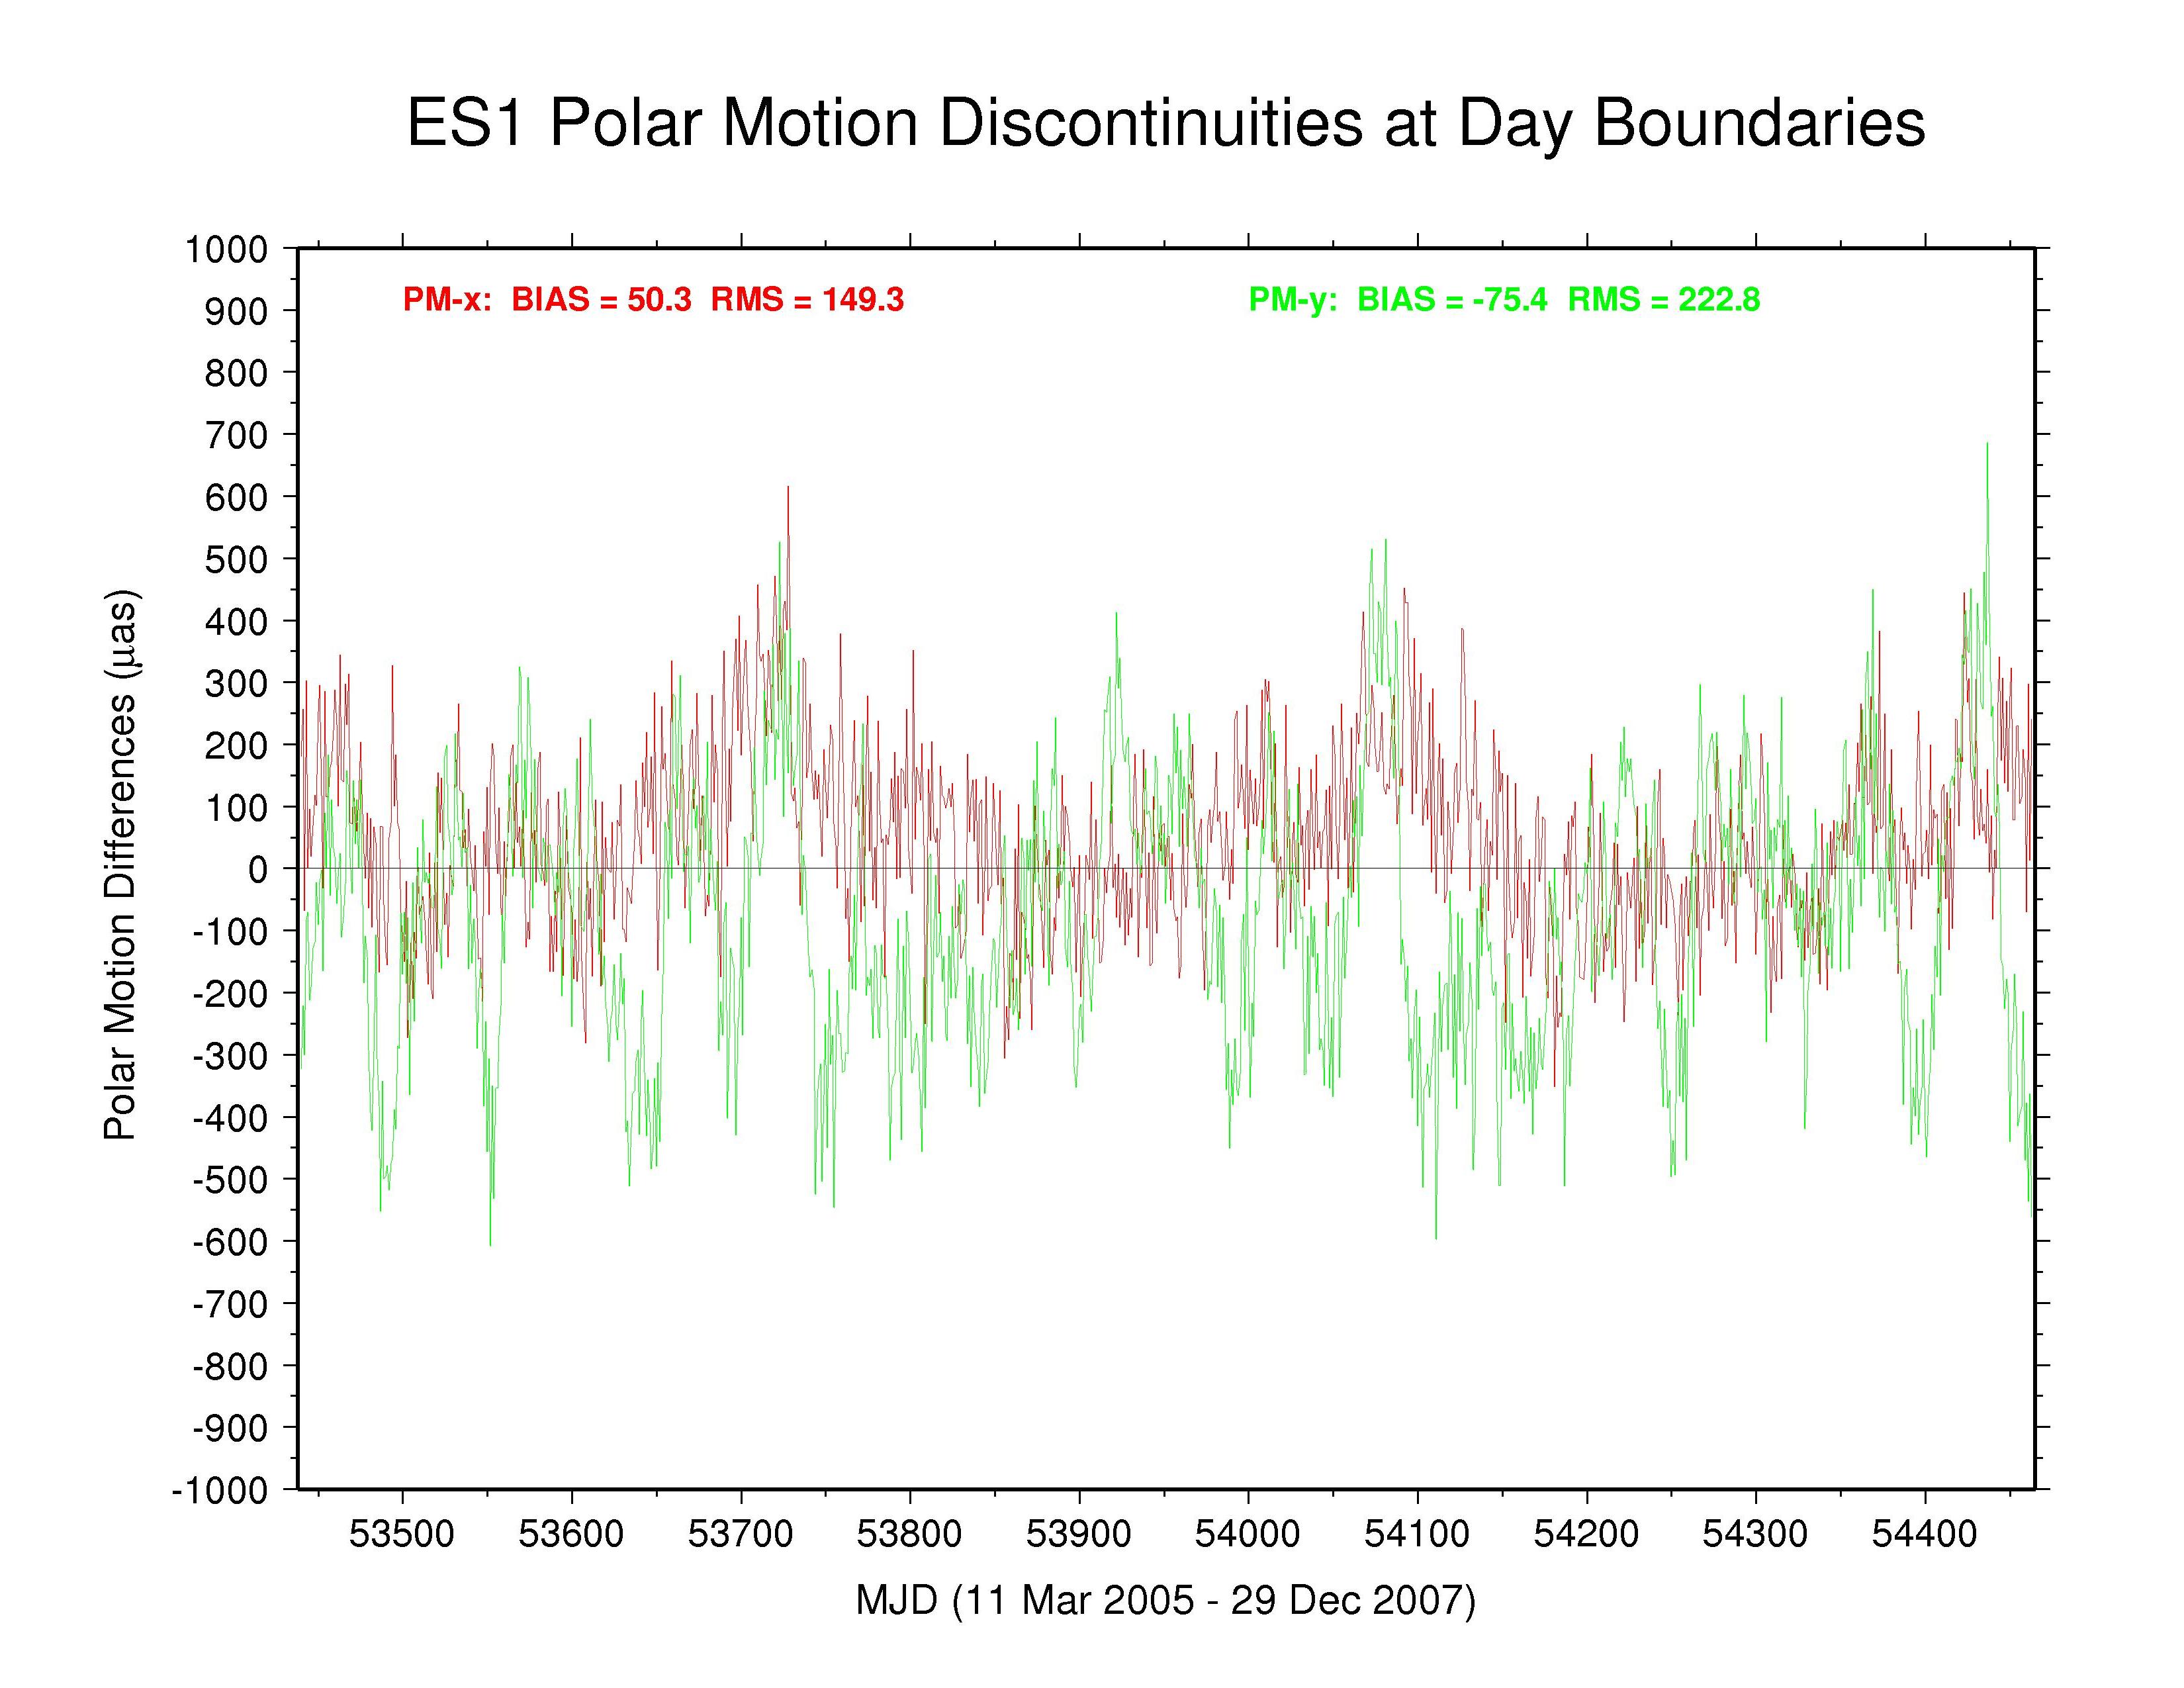 ESA polar motion discontinuities